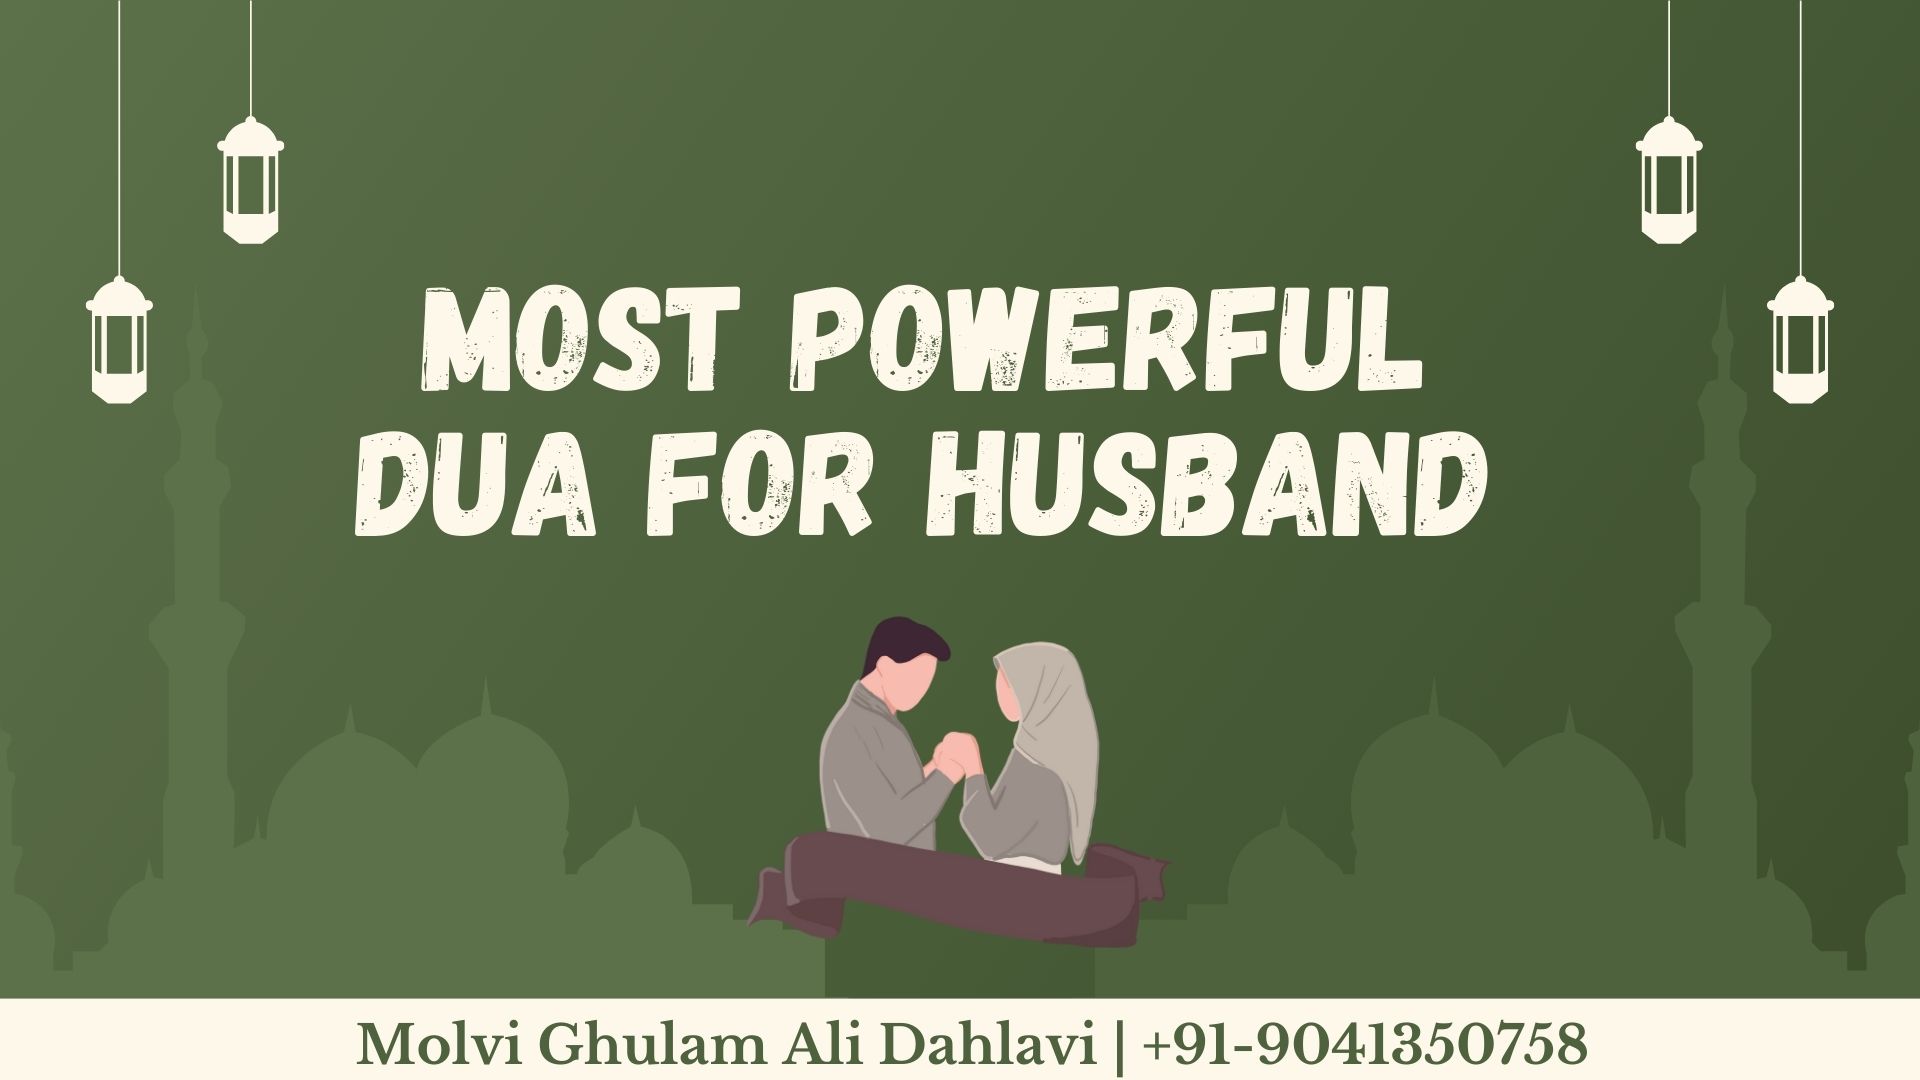 Dua For Husband - Dua To Make Your Husband Love You